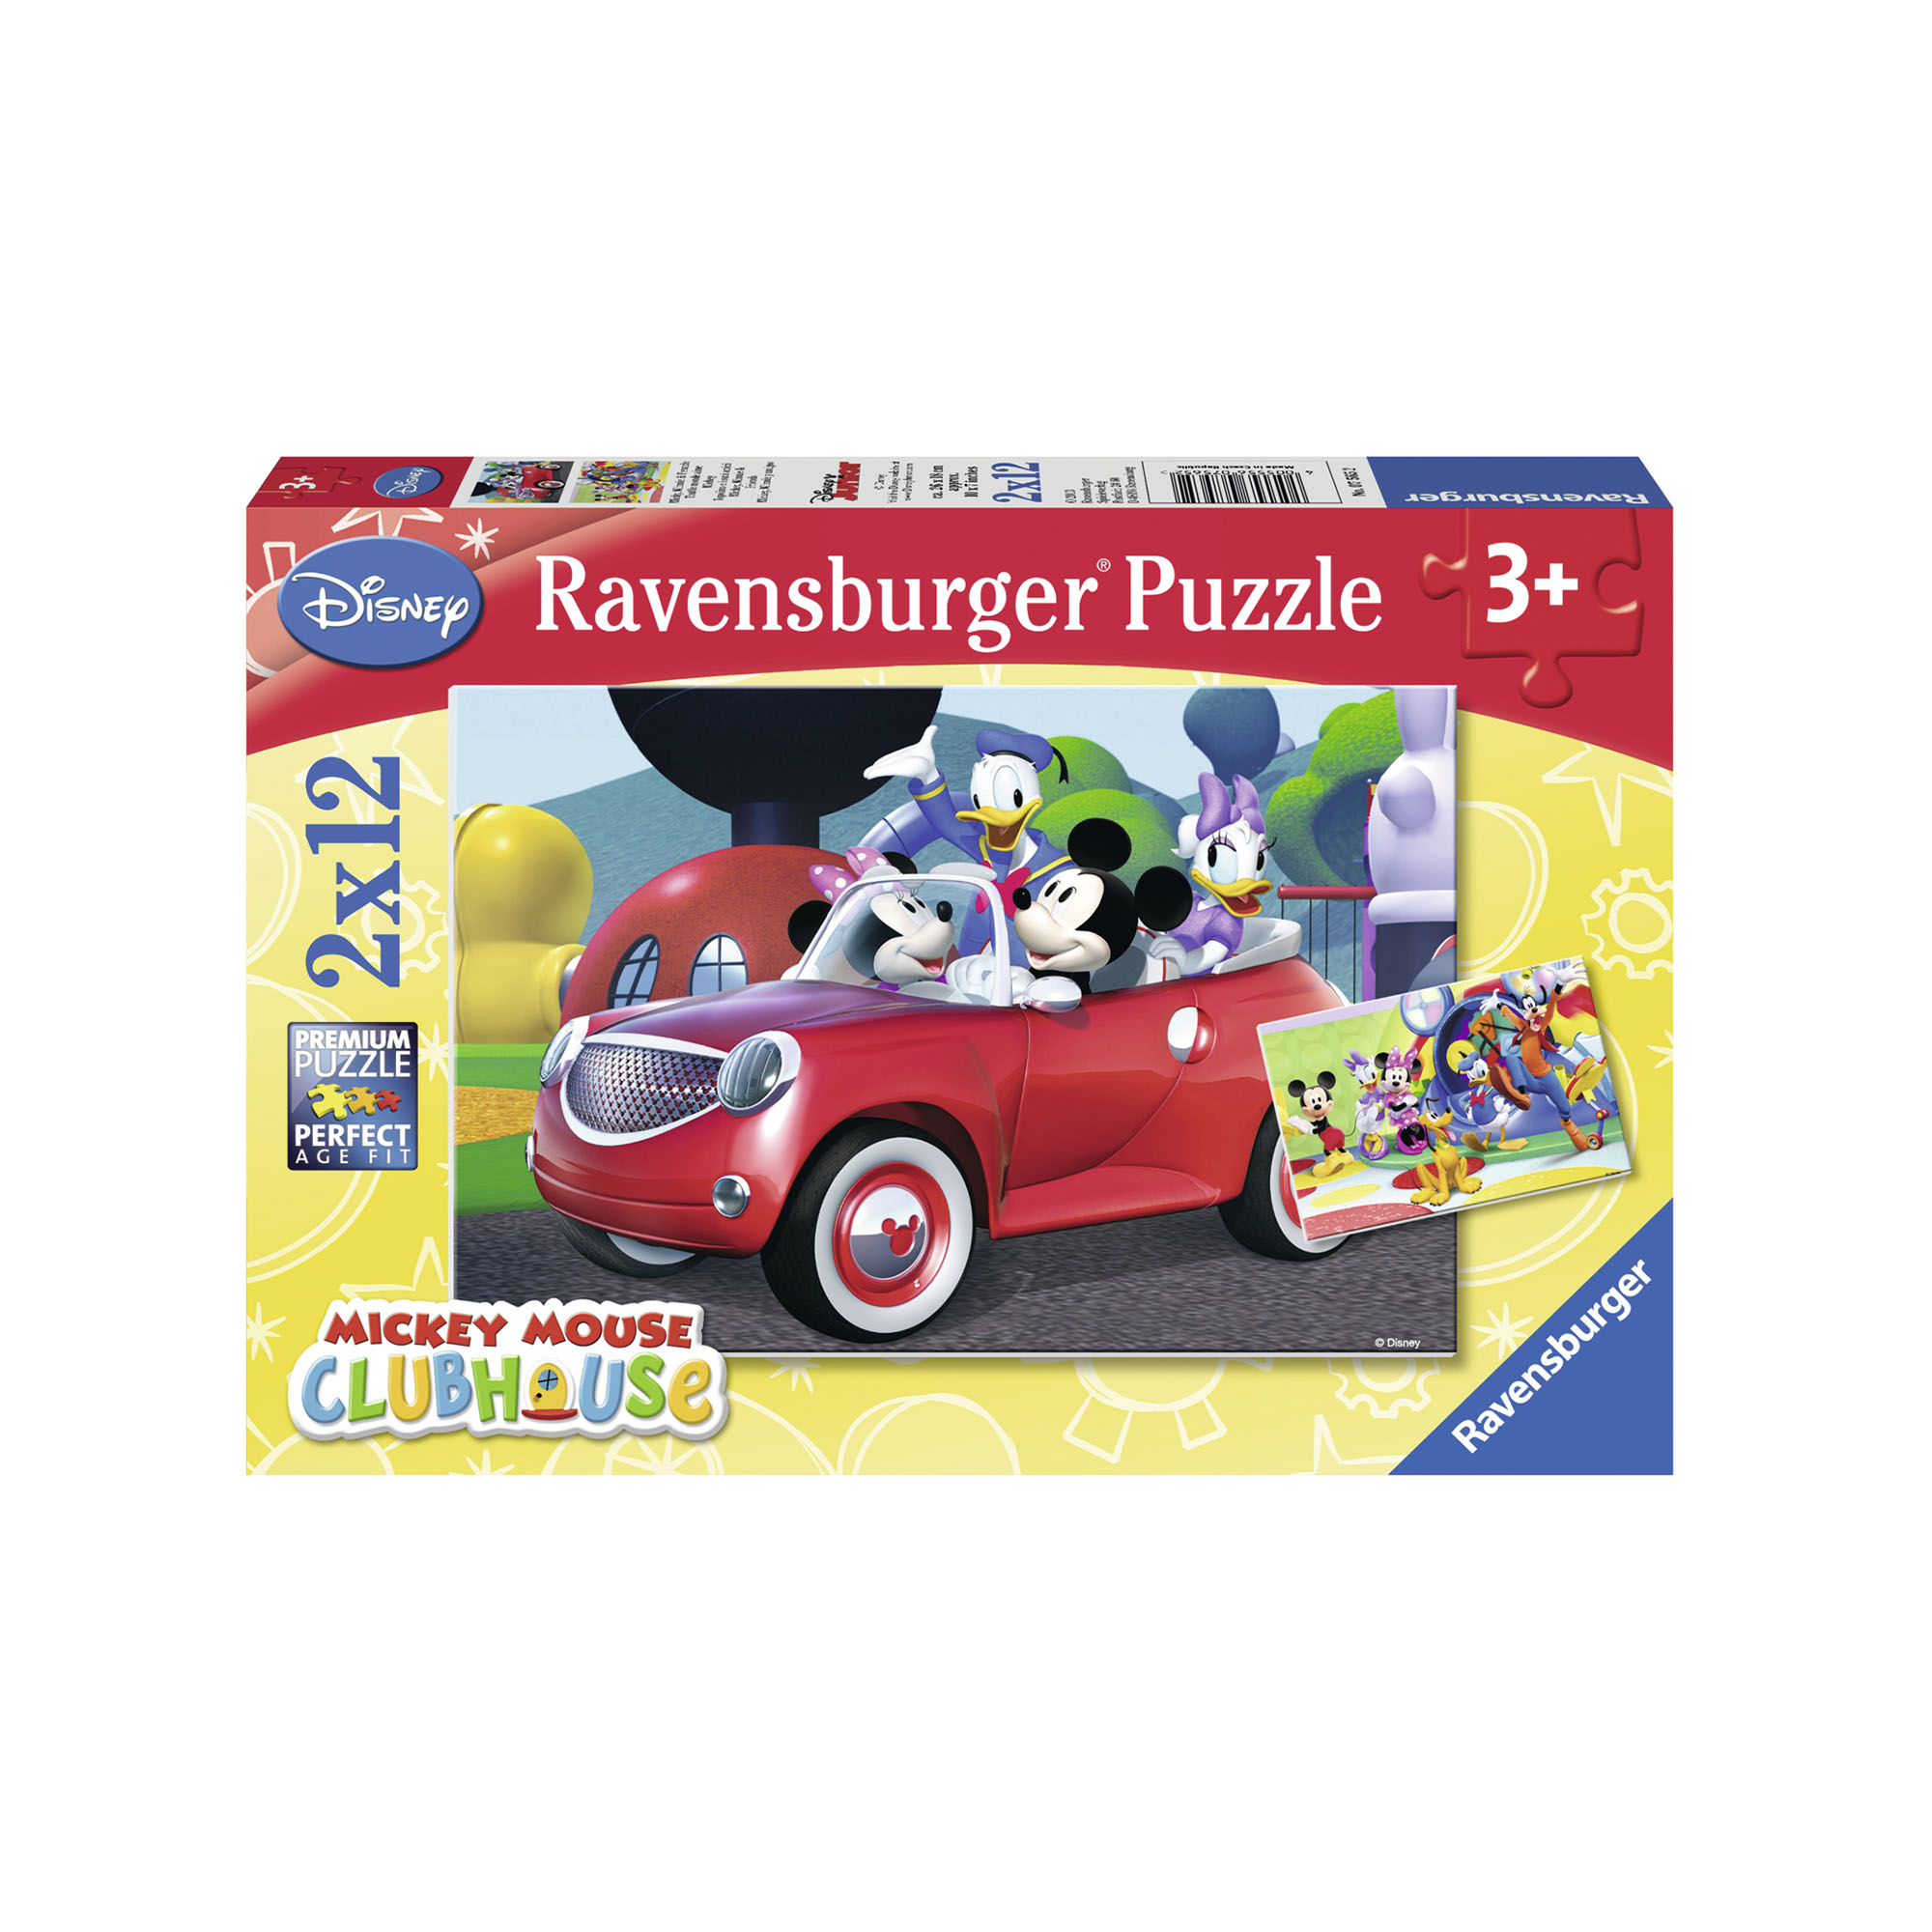 Ravensburger Puzzle 2x12 pezzi 07565 - Topolino Minnie & Co., , large